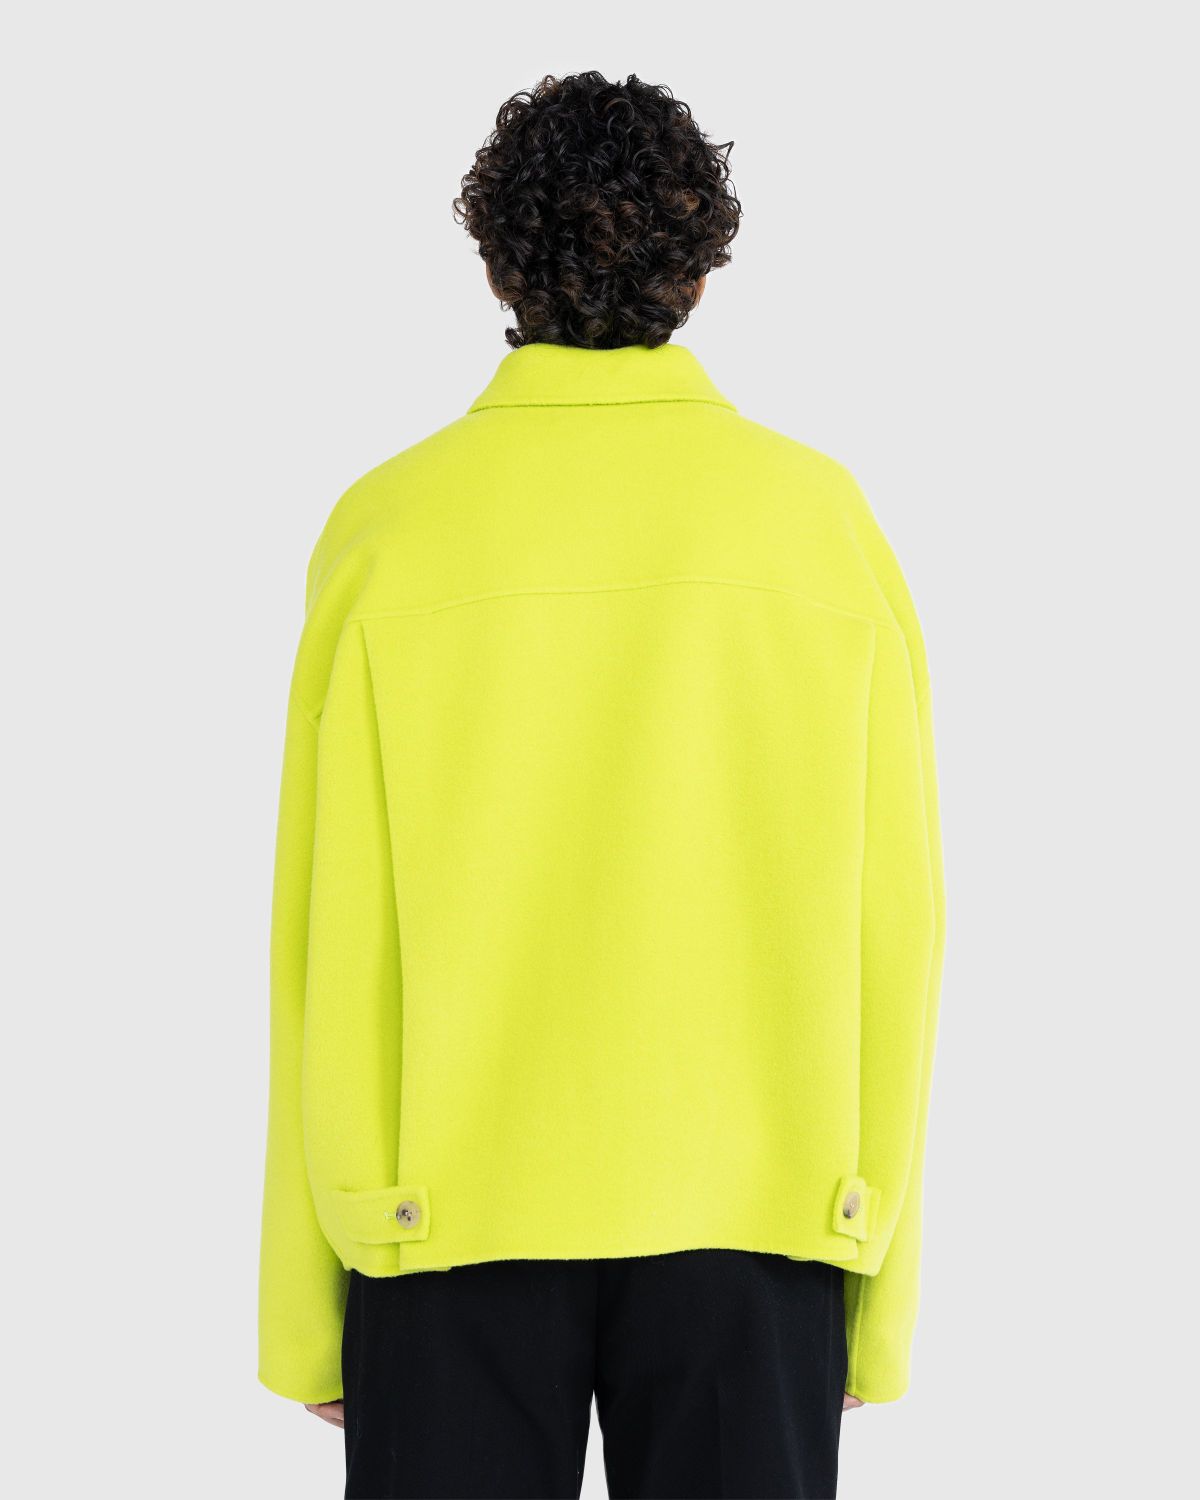 Acne Studios – Wool Zipper Jacket Lime Green - Jackets - Green - Image 5